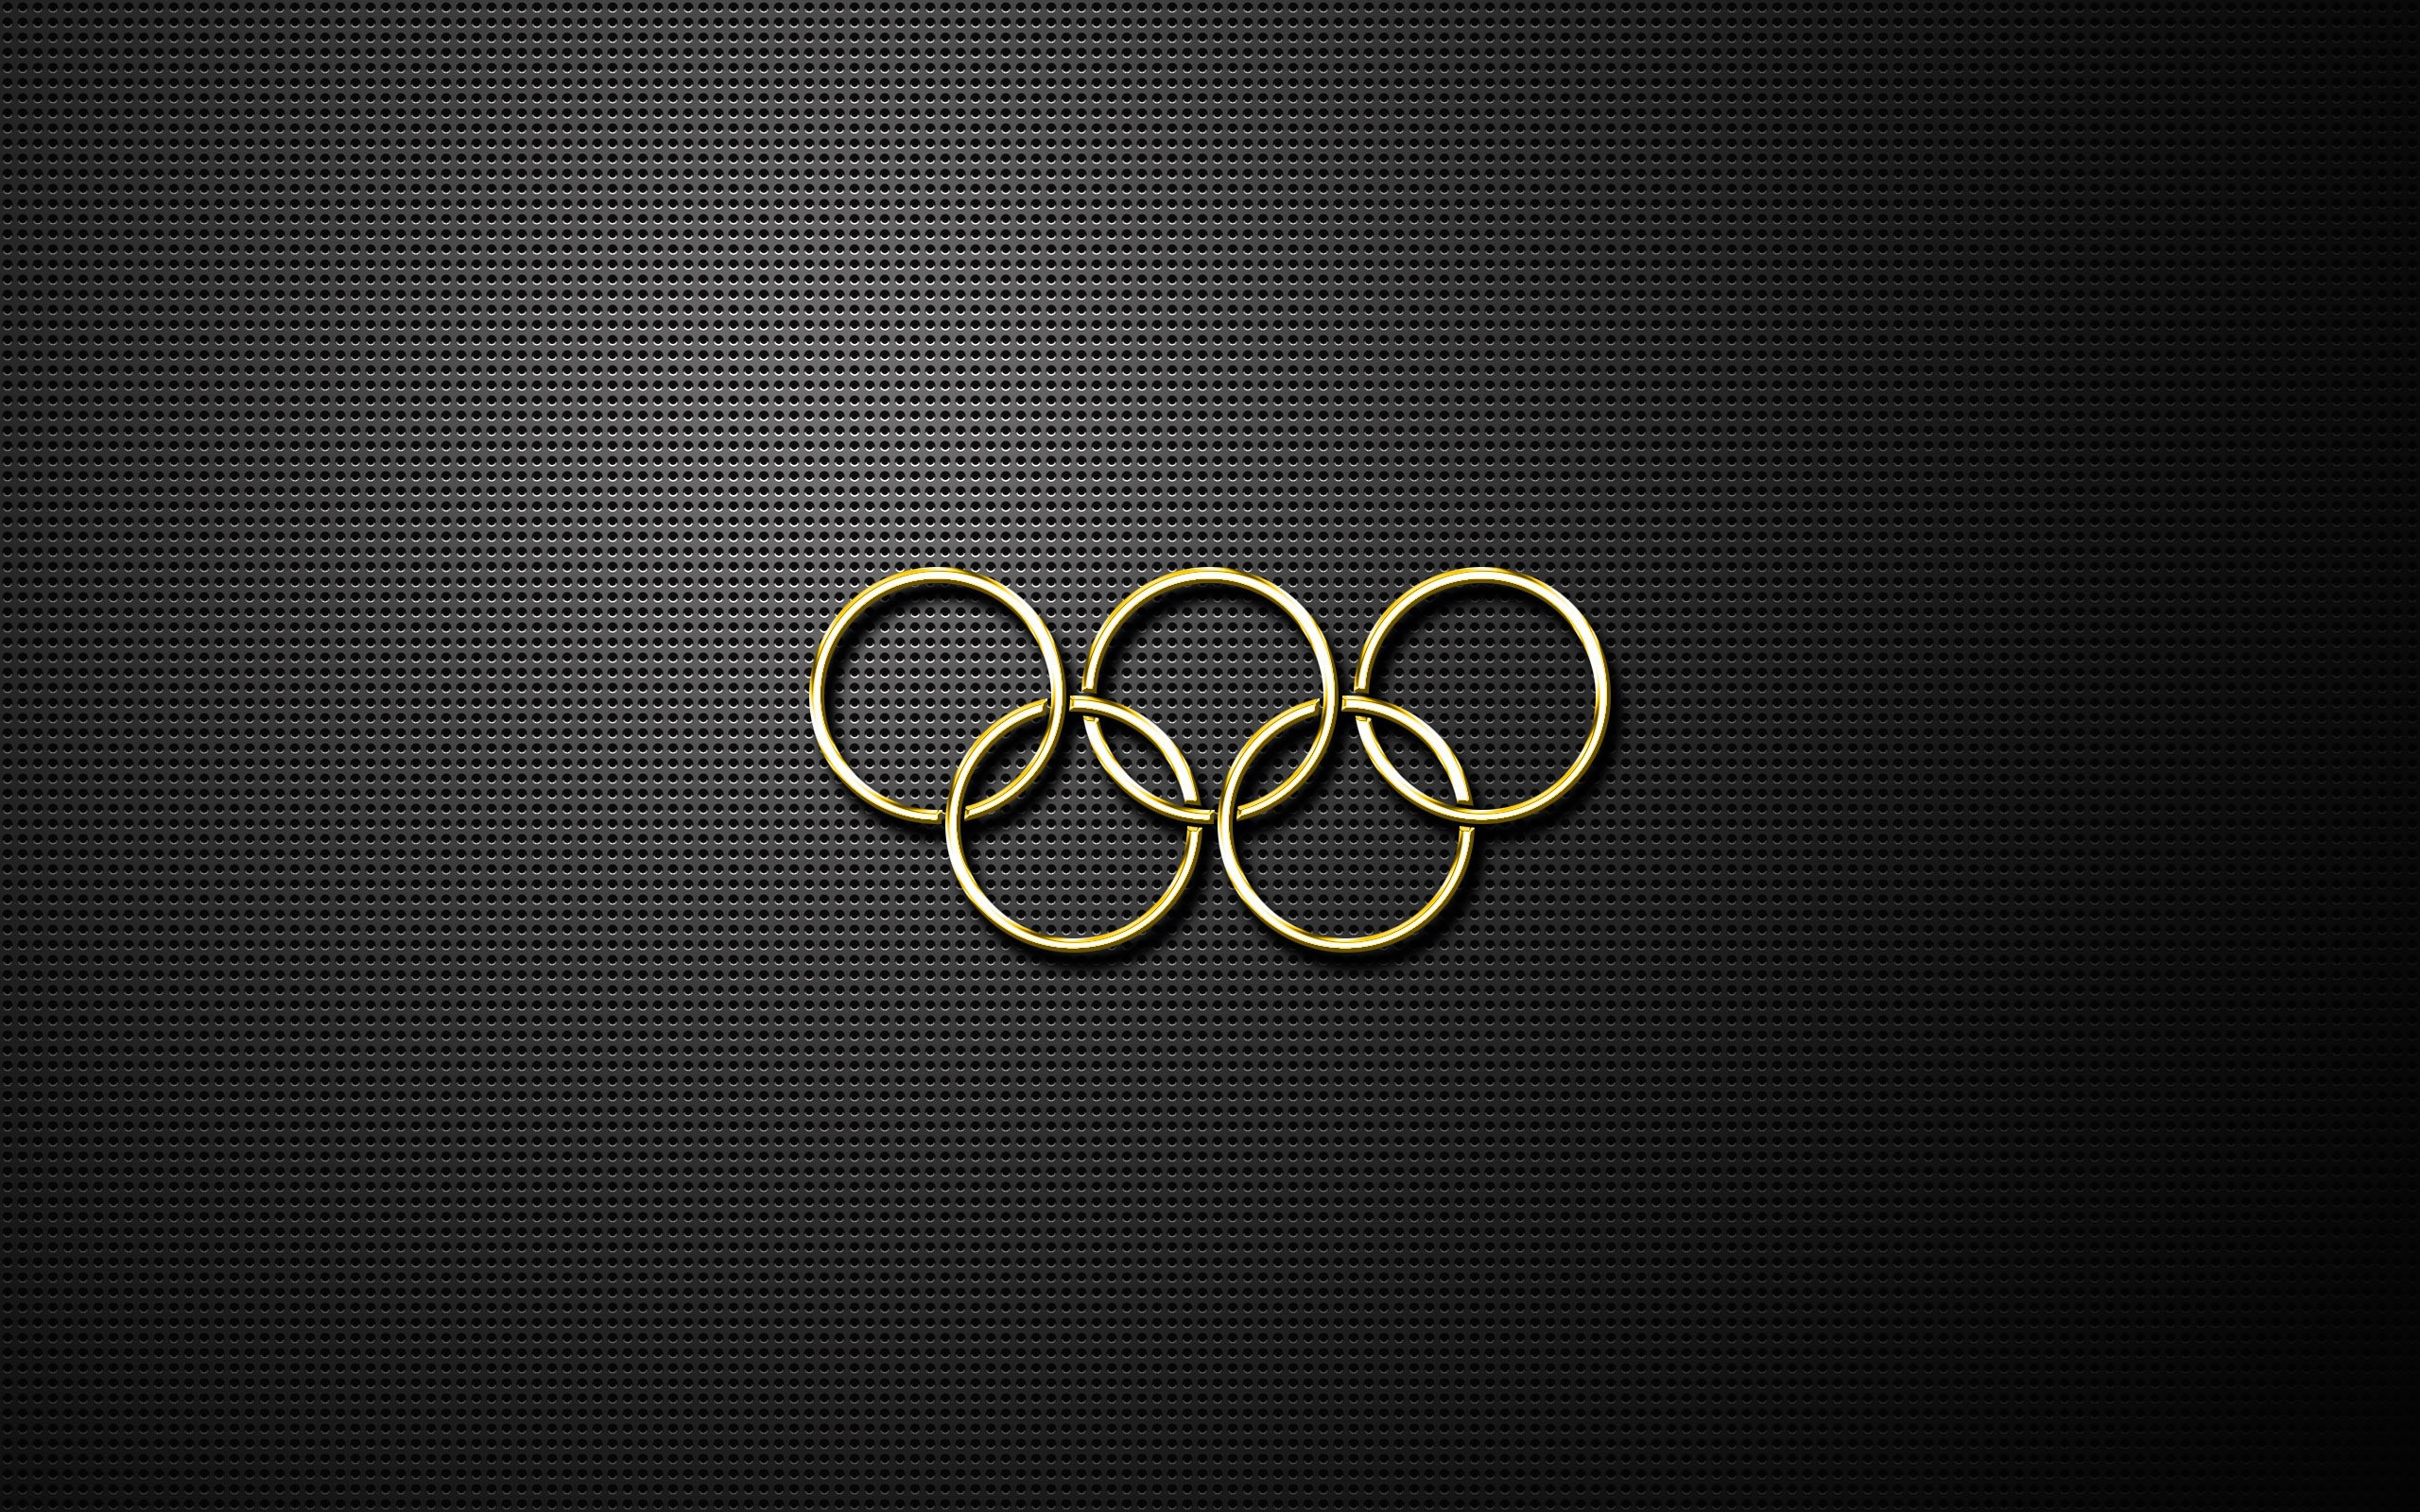 Olympics wallpaper